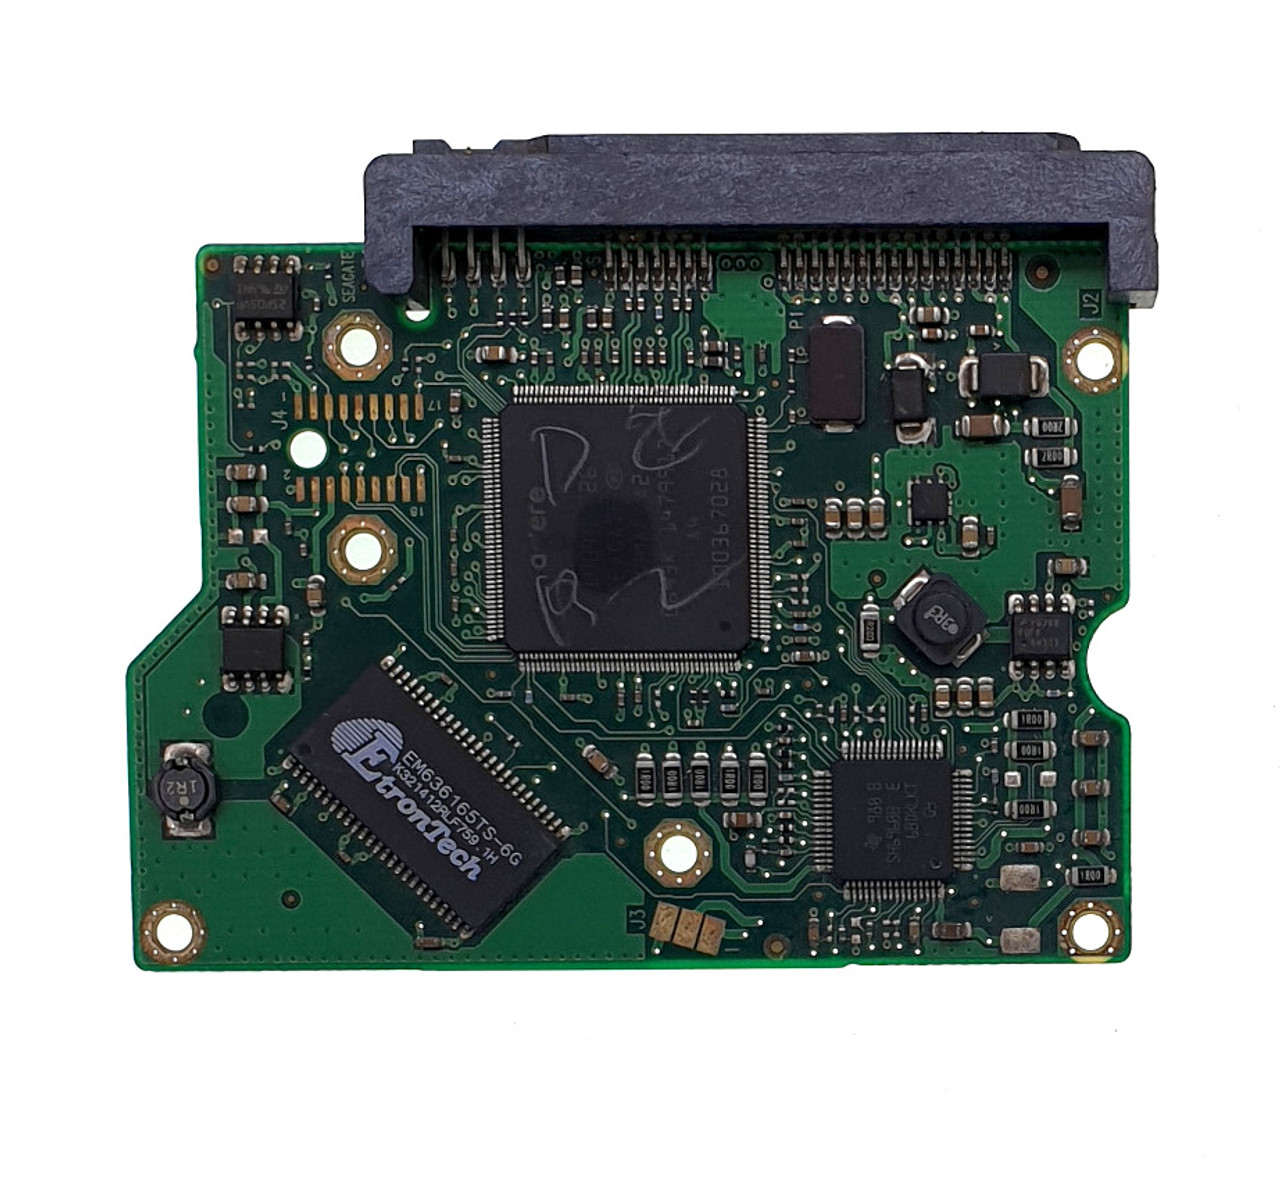 Seagate 3.5" SATA Hard Drive Maxtor STM380215AS Seagate ST380815AS  ST380215AS 80GB HDD PCB Board Circuit Control Logic Board 100422559